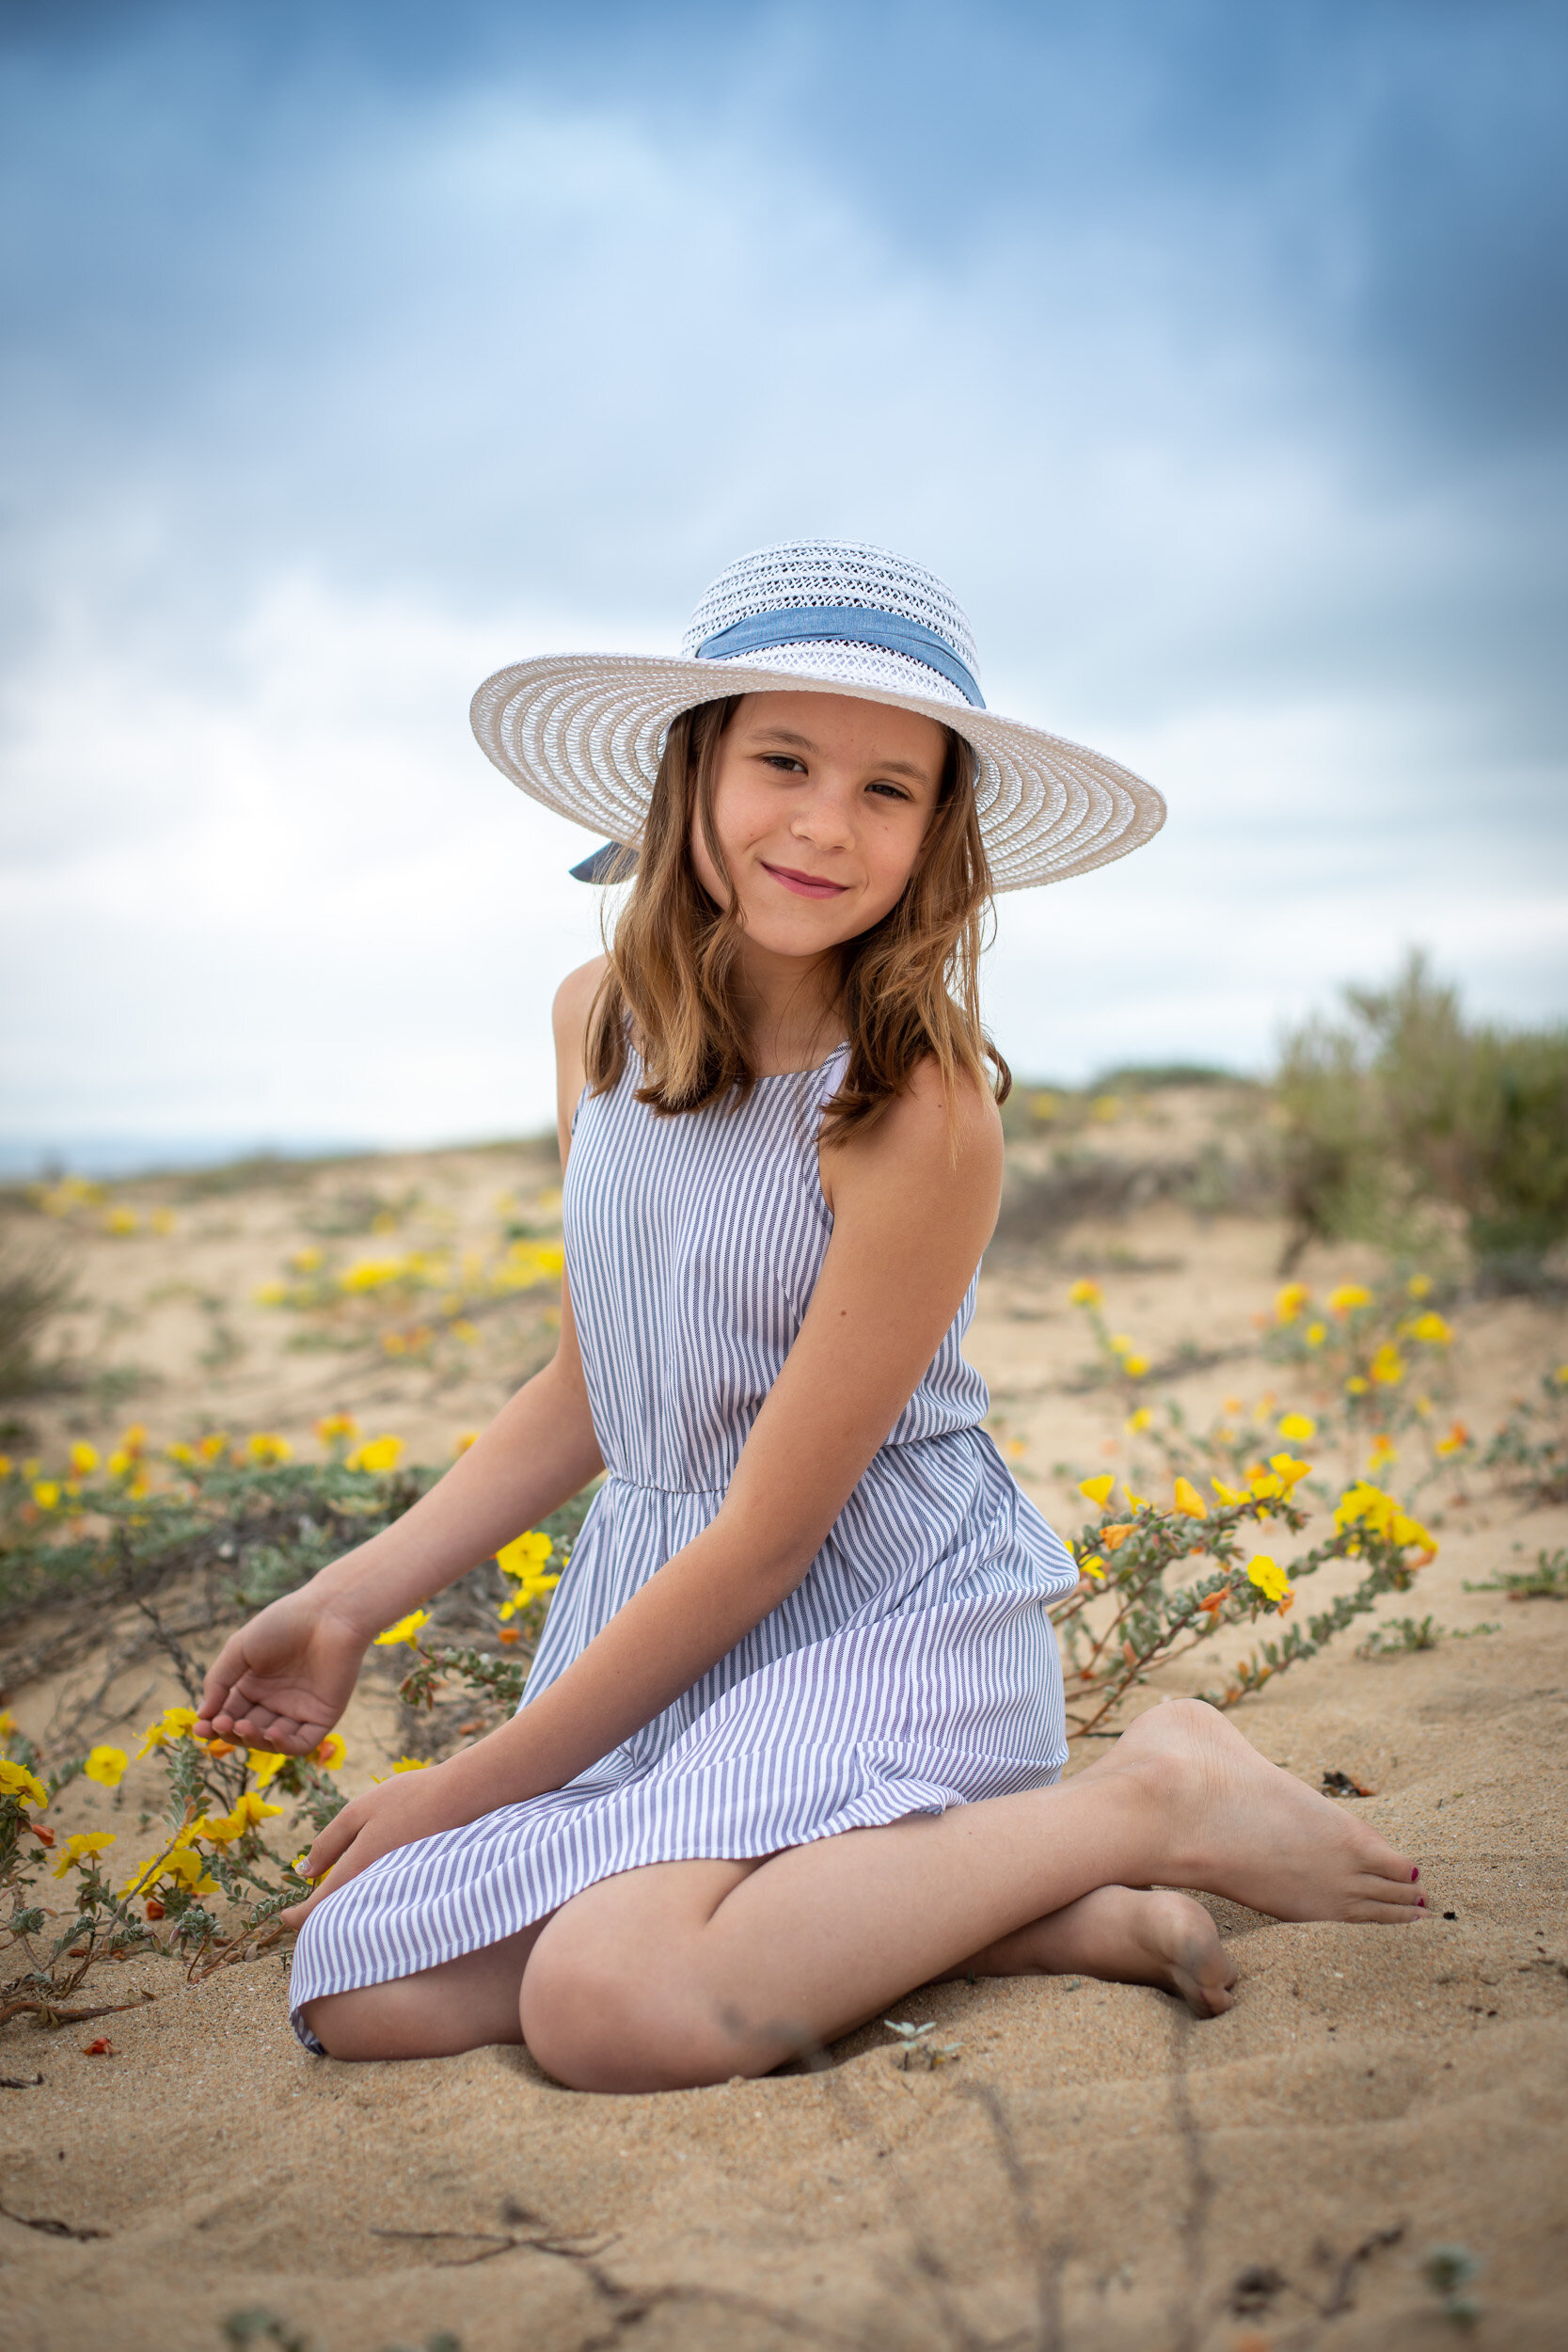 Girl-sitting-sand-yellow-flowers-white-hat-blue-ribbon.jpg